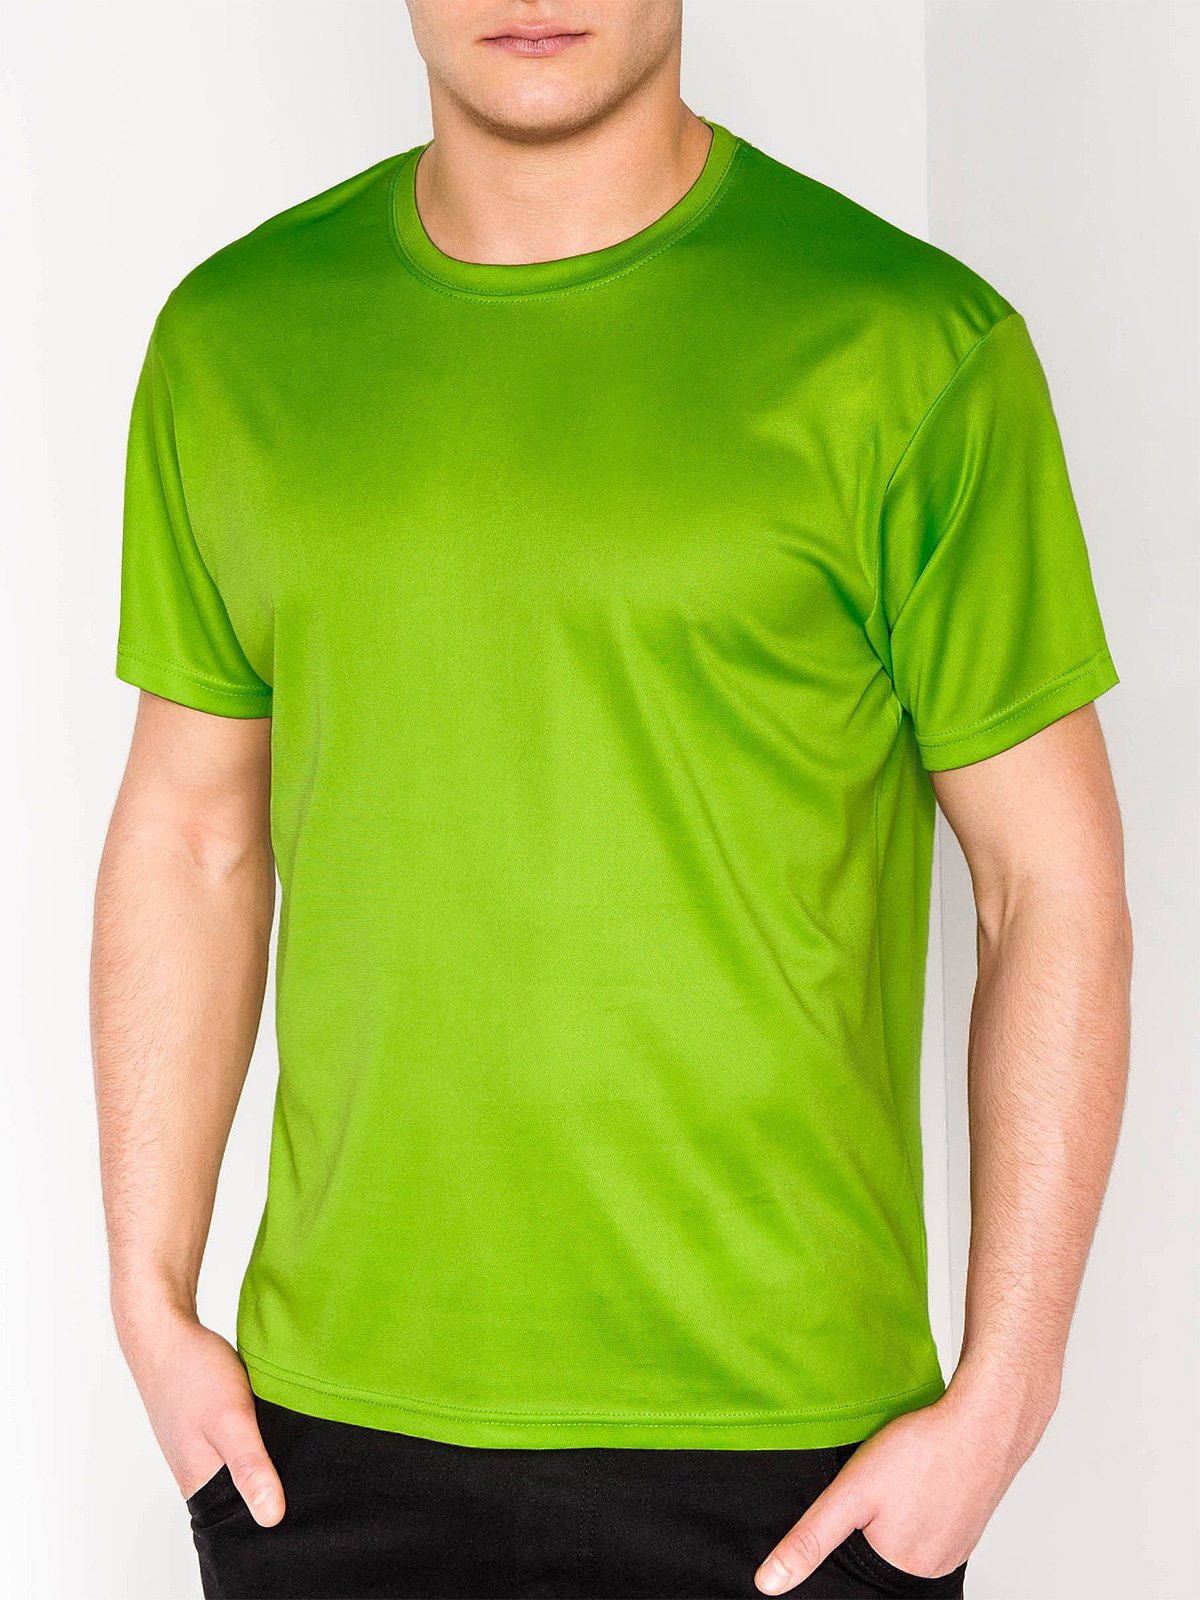 Eng Pl Mens Plain T Shirt S883 Lime Green 8603 1 